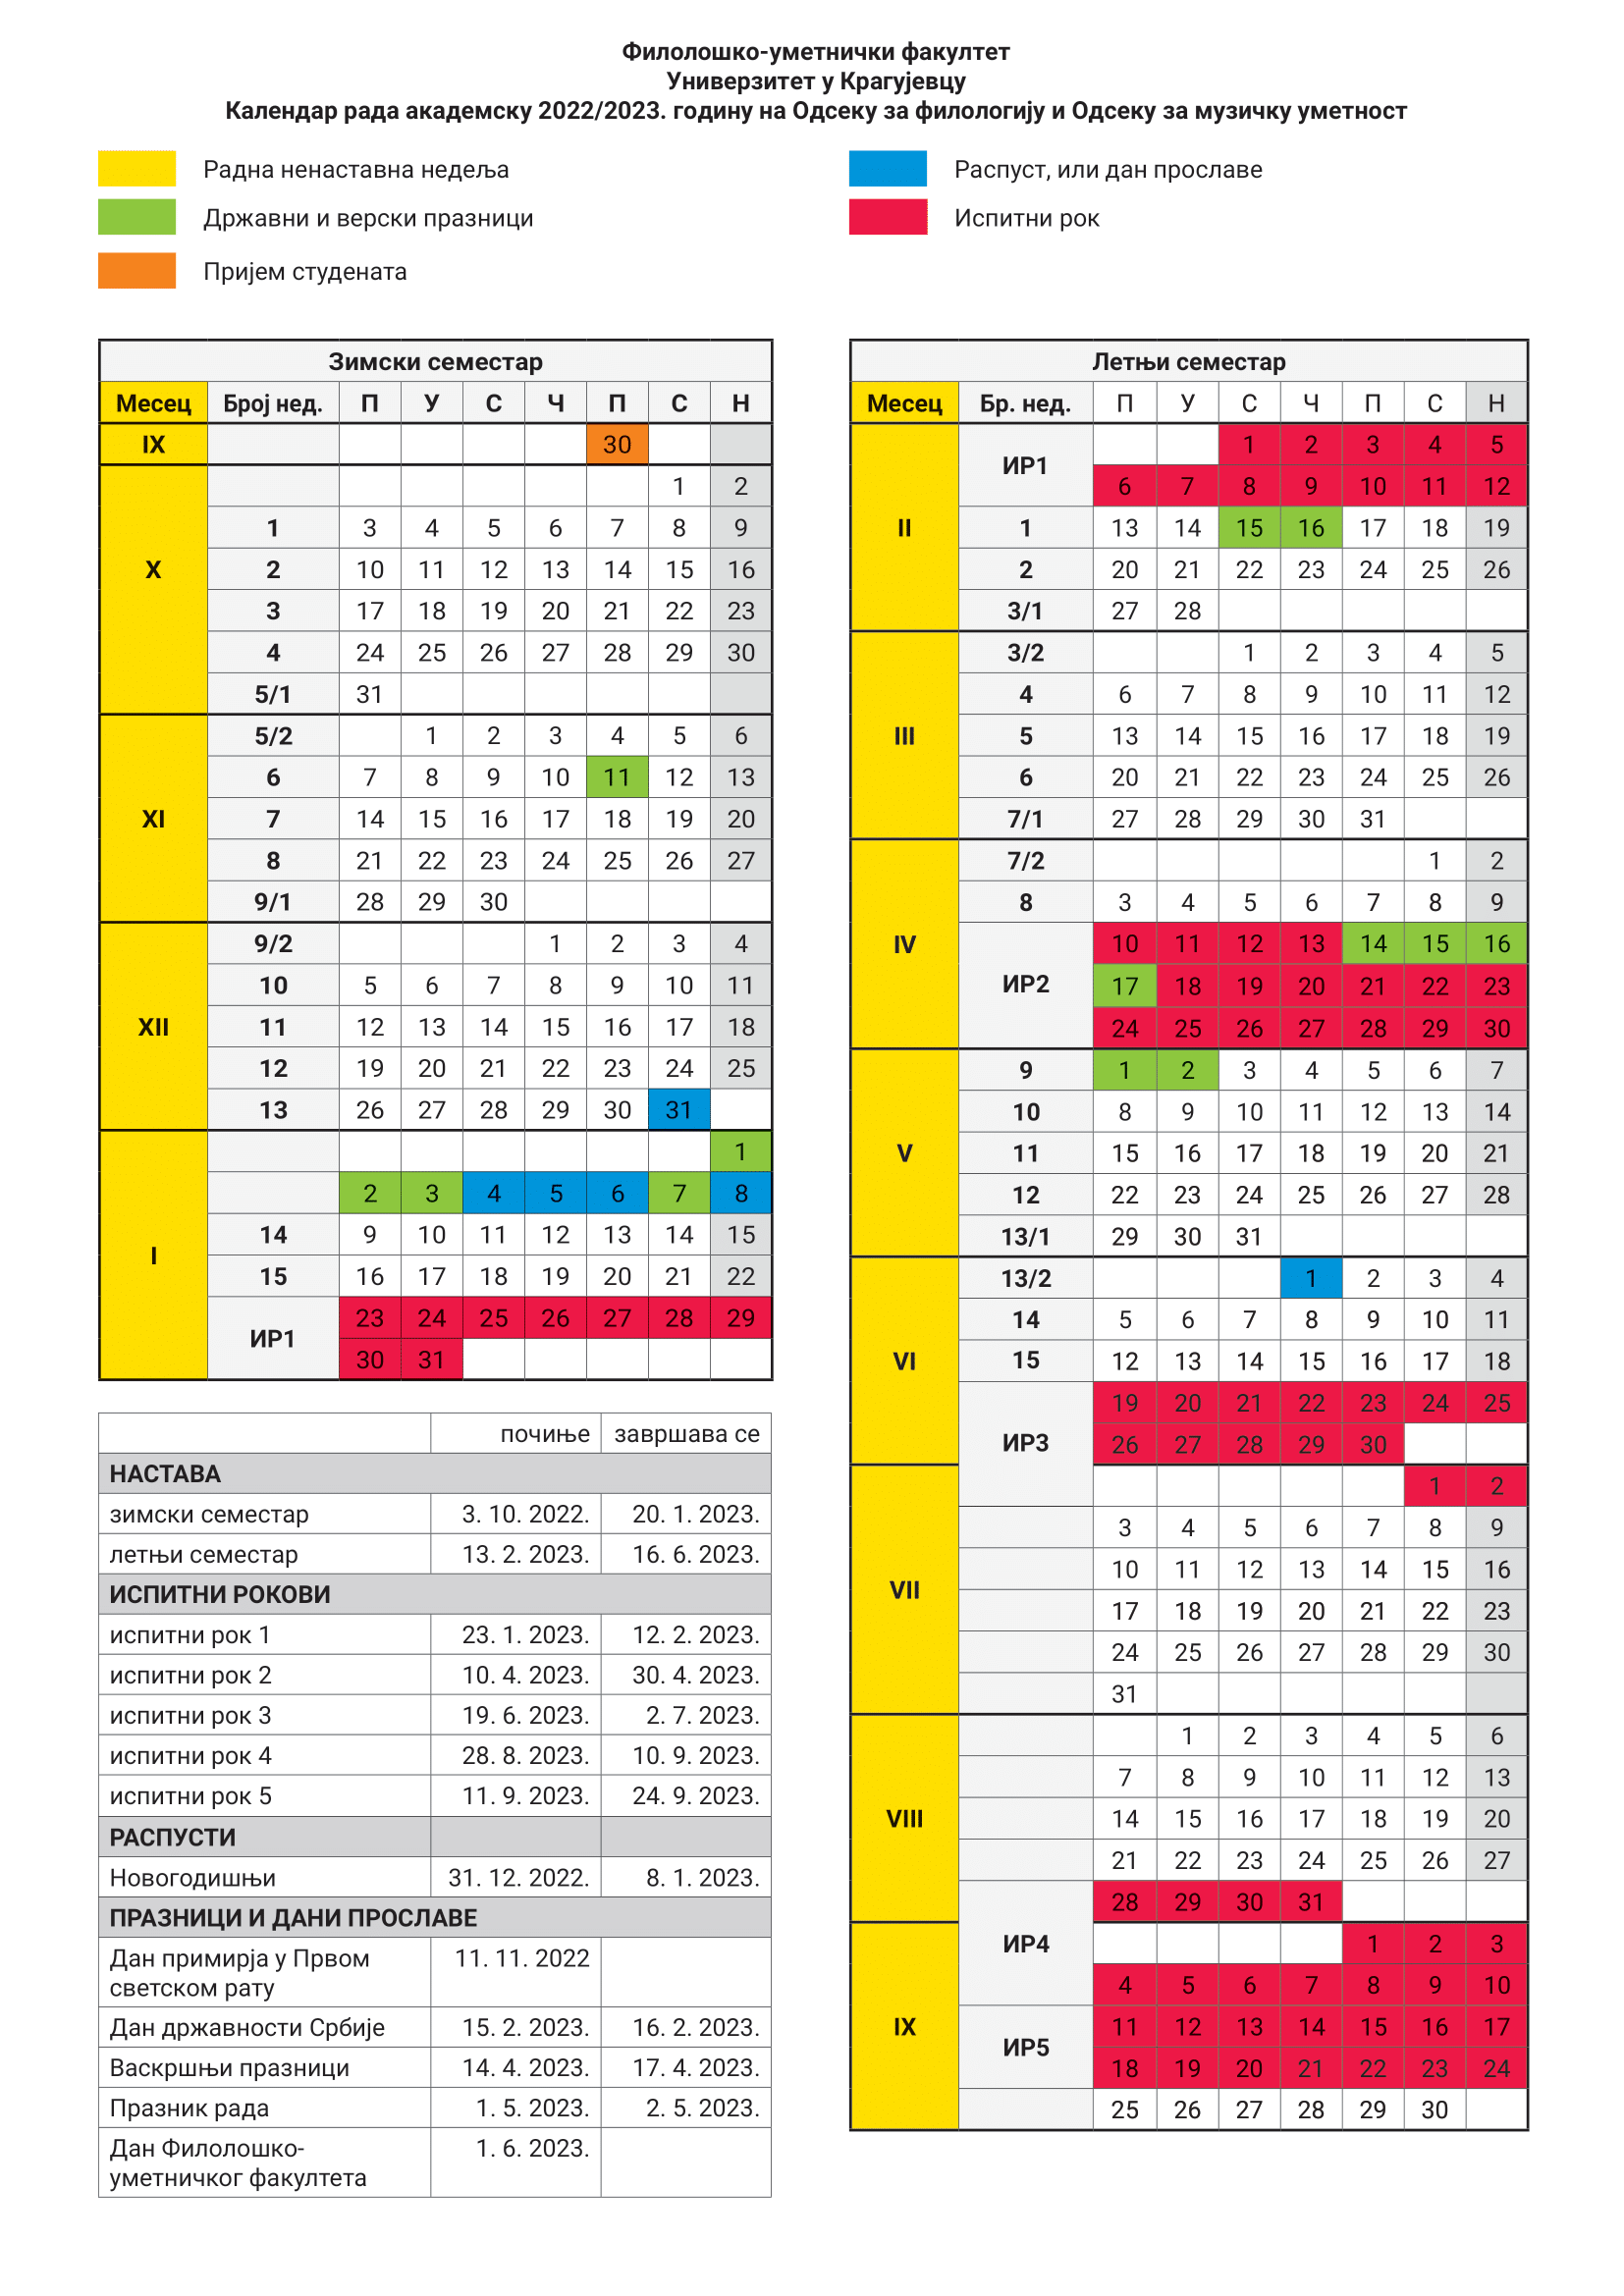 Kalendar rada filologija 2022/23